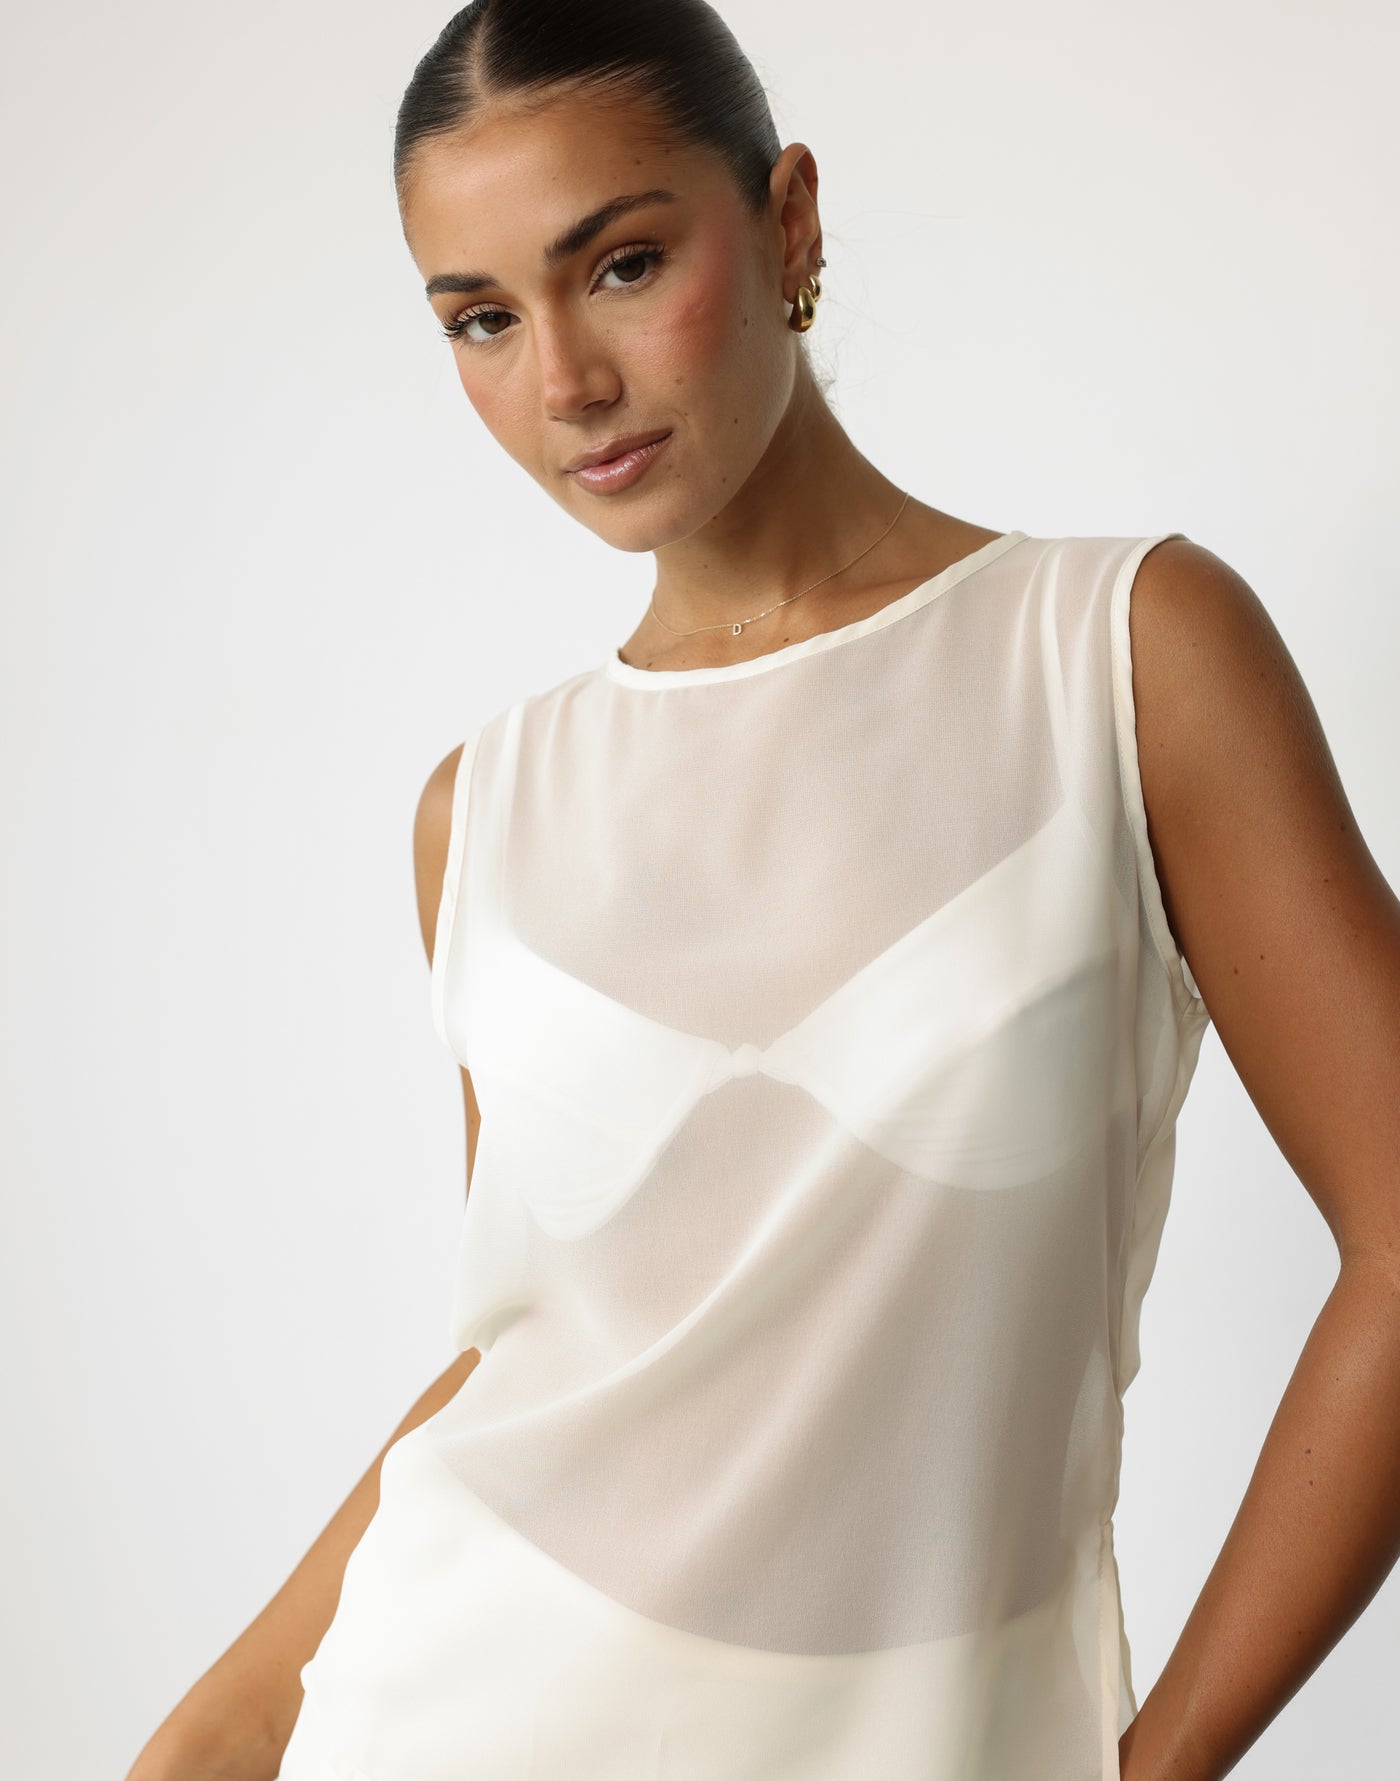 Angelo Top (Cream) | CHARCOAL Exclusive - Sheer Asymmetrical Hem Top - Women's Top - Charcoal Clothing